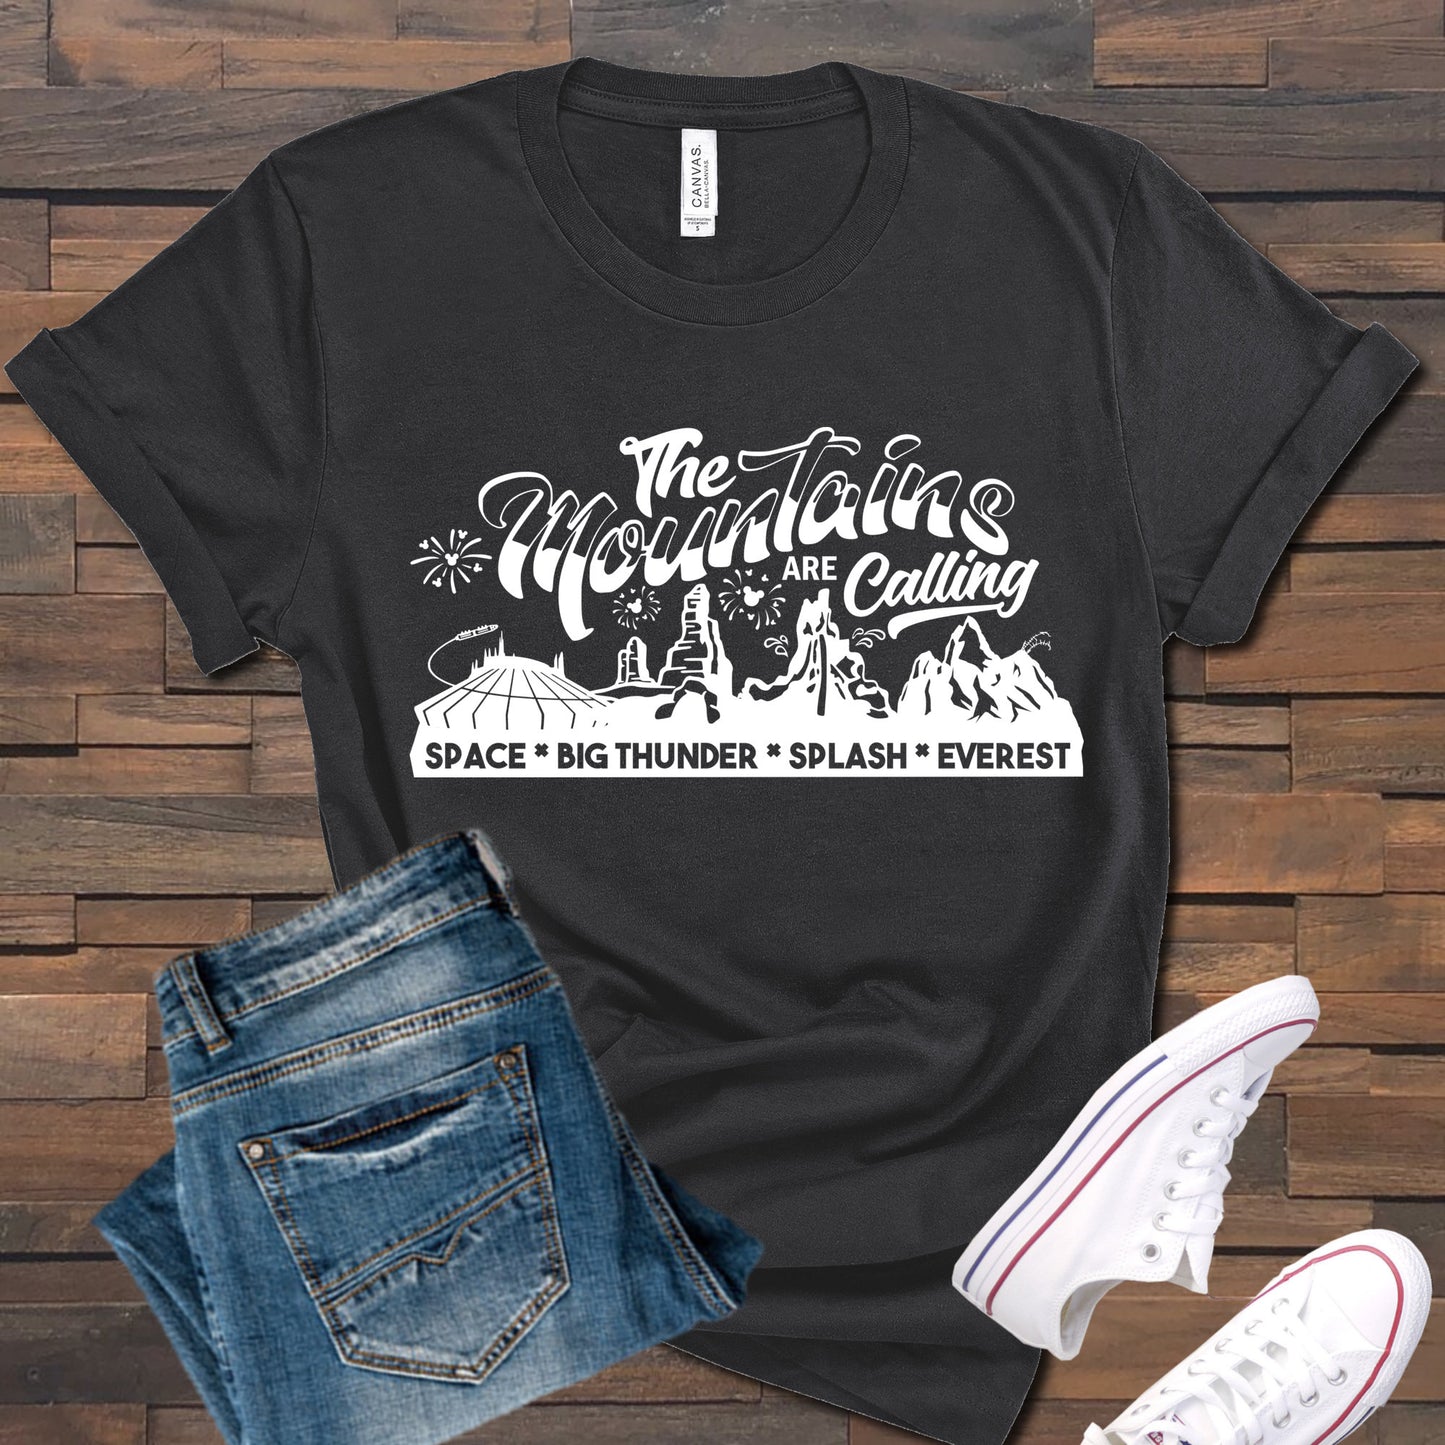 The Mountains Are Calling Shirt, Mountains of Disney Shirt, Disney Trip Shirt, Vacation Shirt, Park Shirt, Women's Shirt, Unisex Shirt